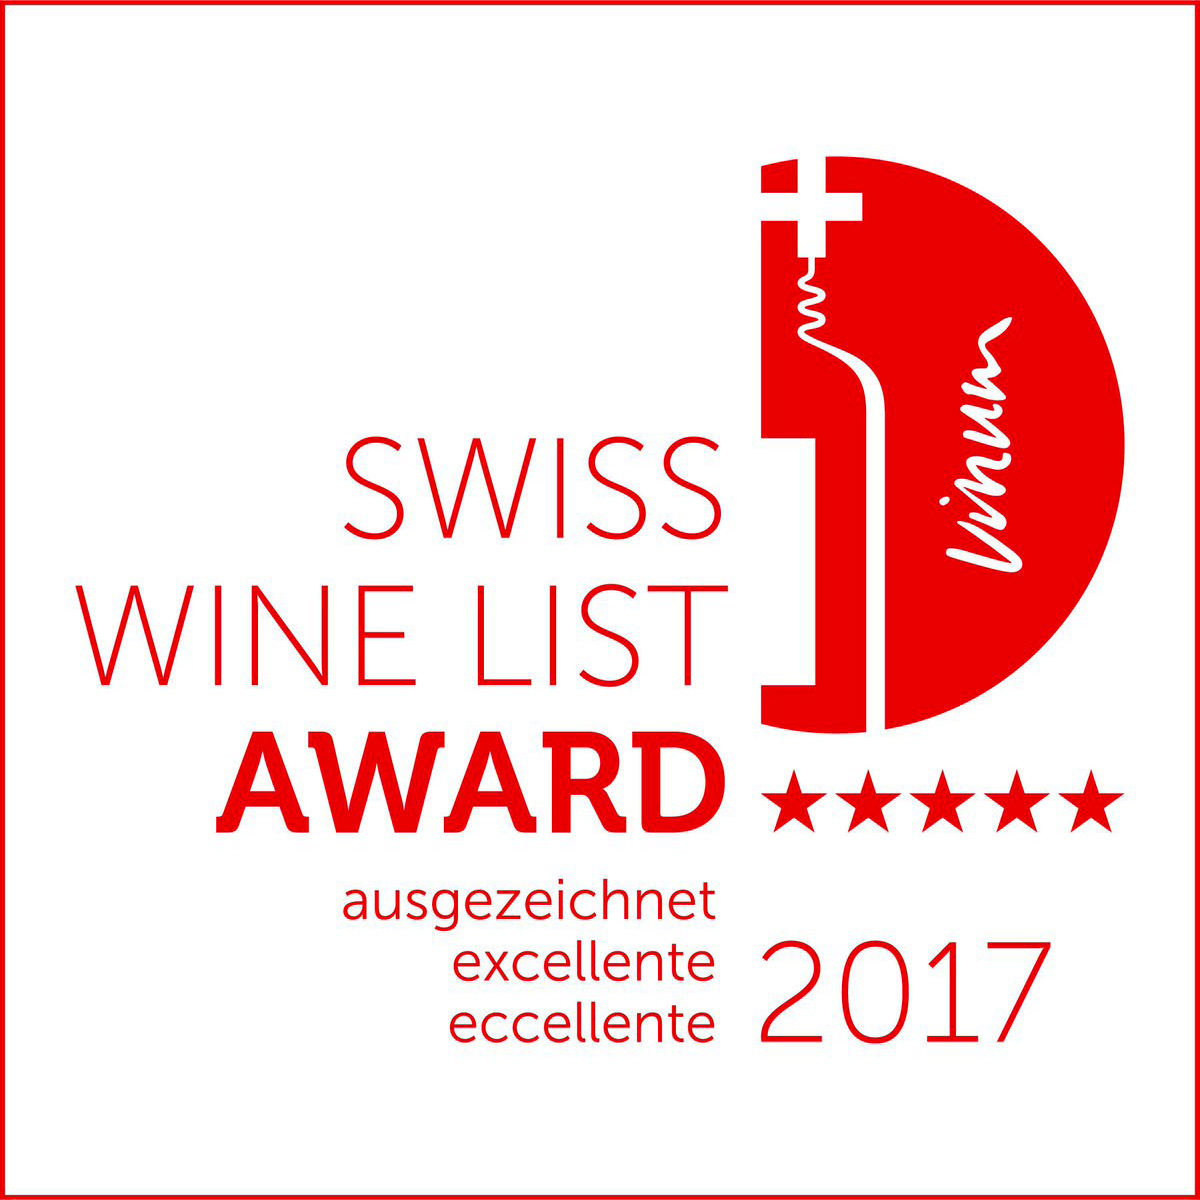 wine list award 2017